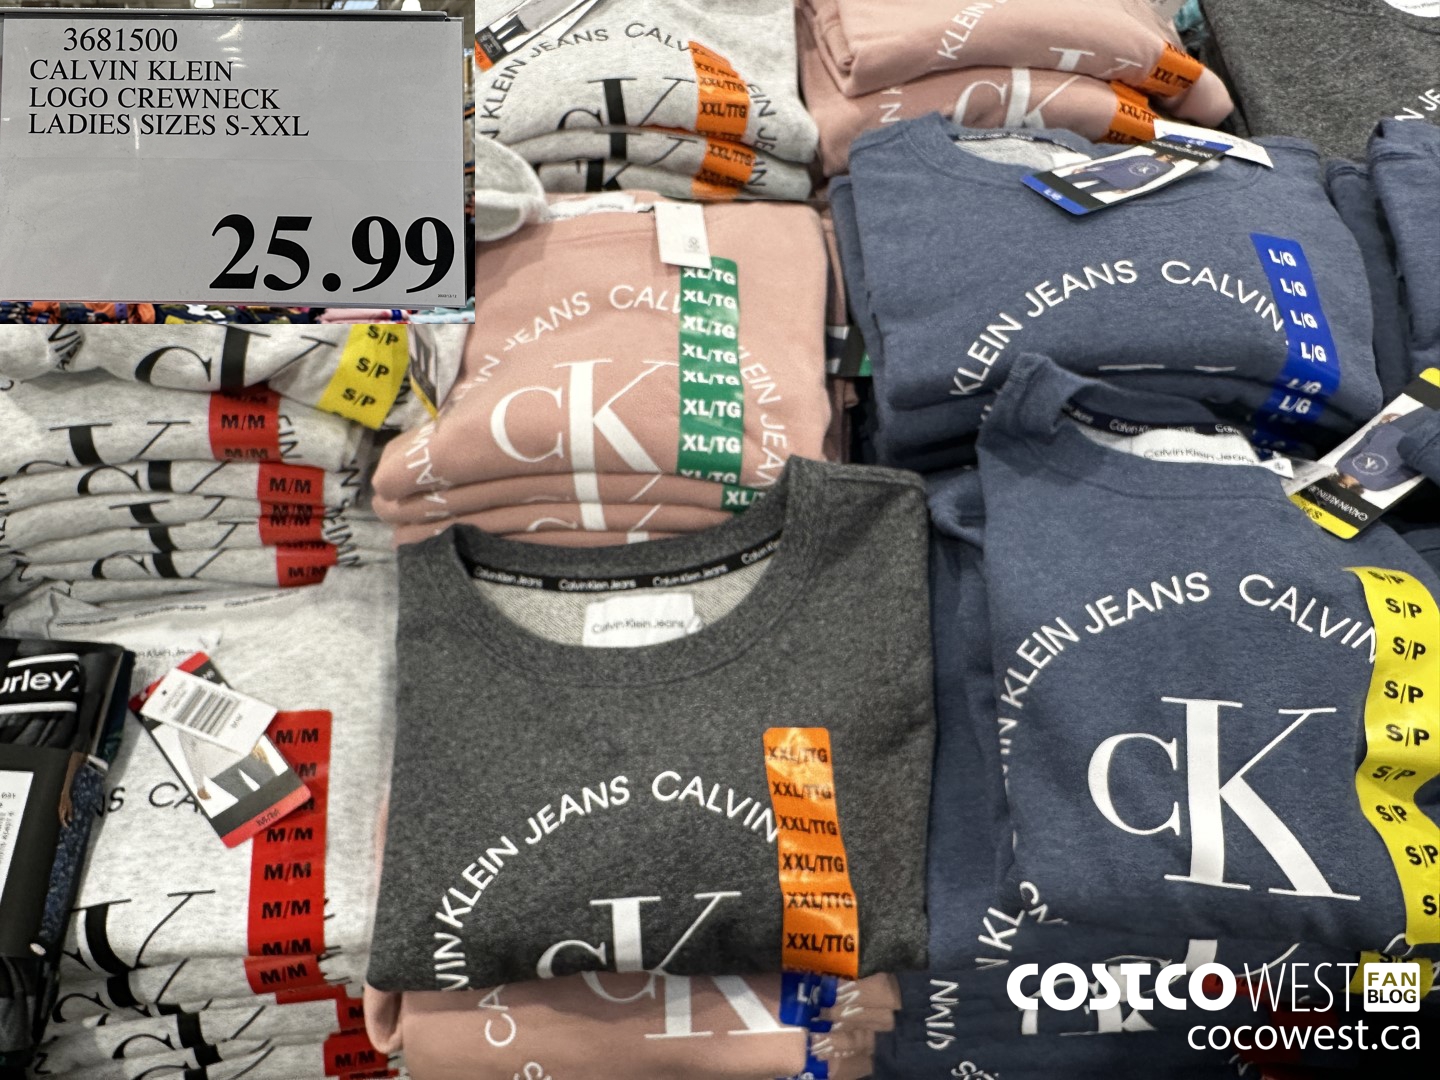 Calvin Klein hand towels only $7.99 #costco #costcowholesale  #kirklandsignature #costco_doesitagain #costcobuys #costcofinds  #thecostcoc